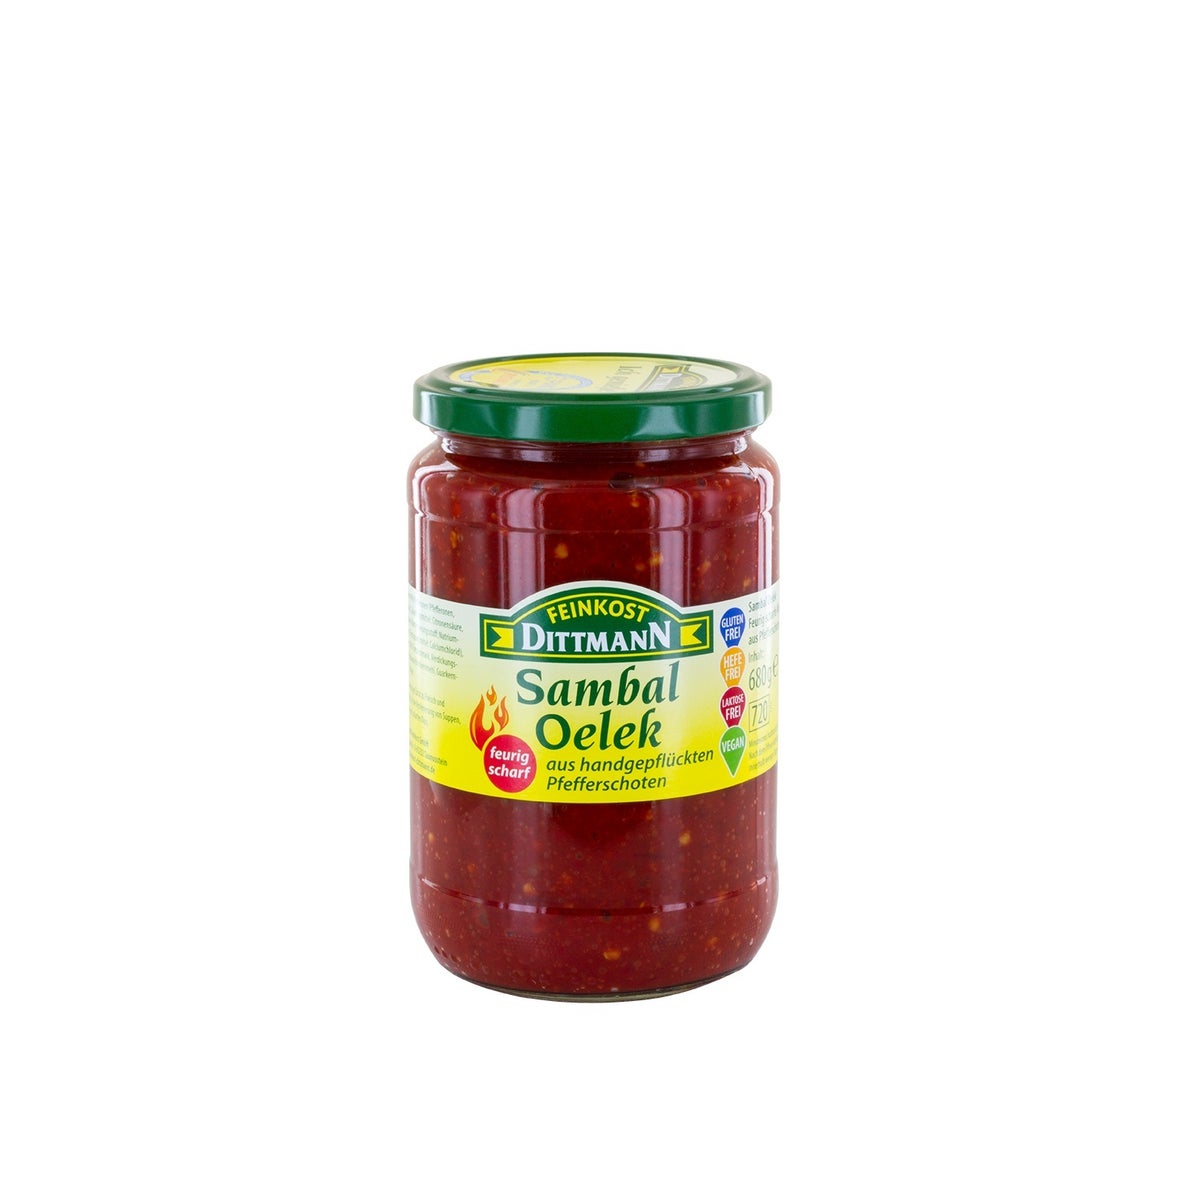 Dittmann Hot Chili Sauce 24oz 680g                           400223954600